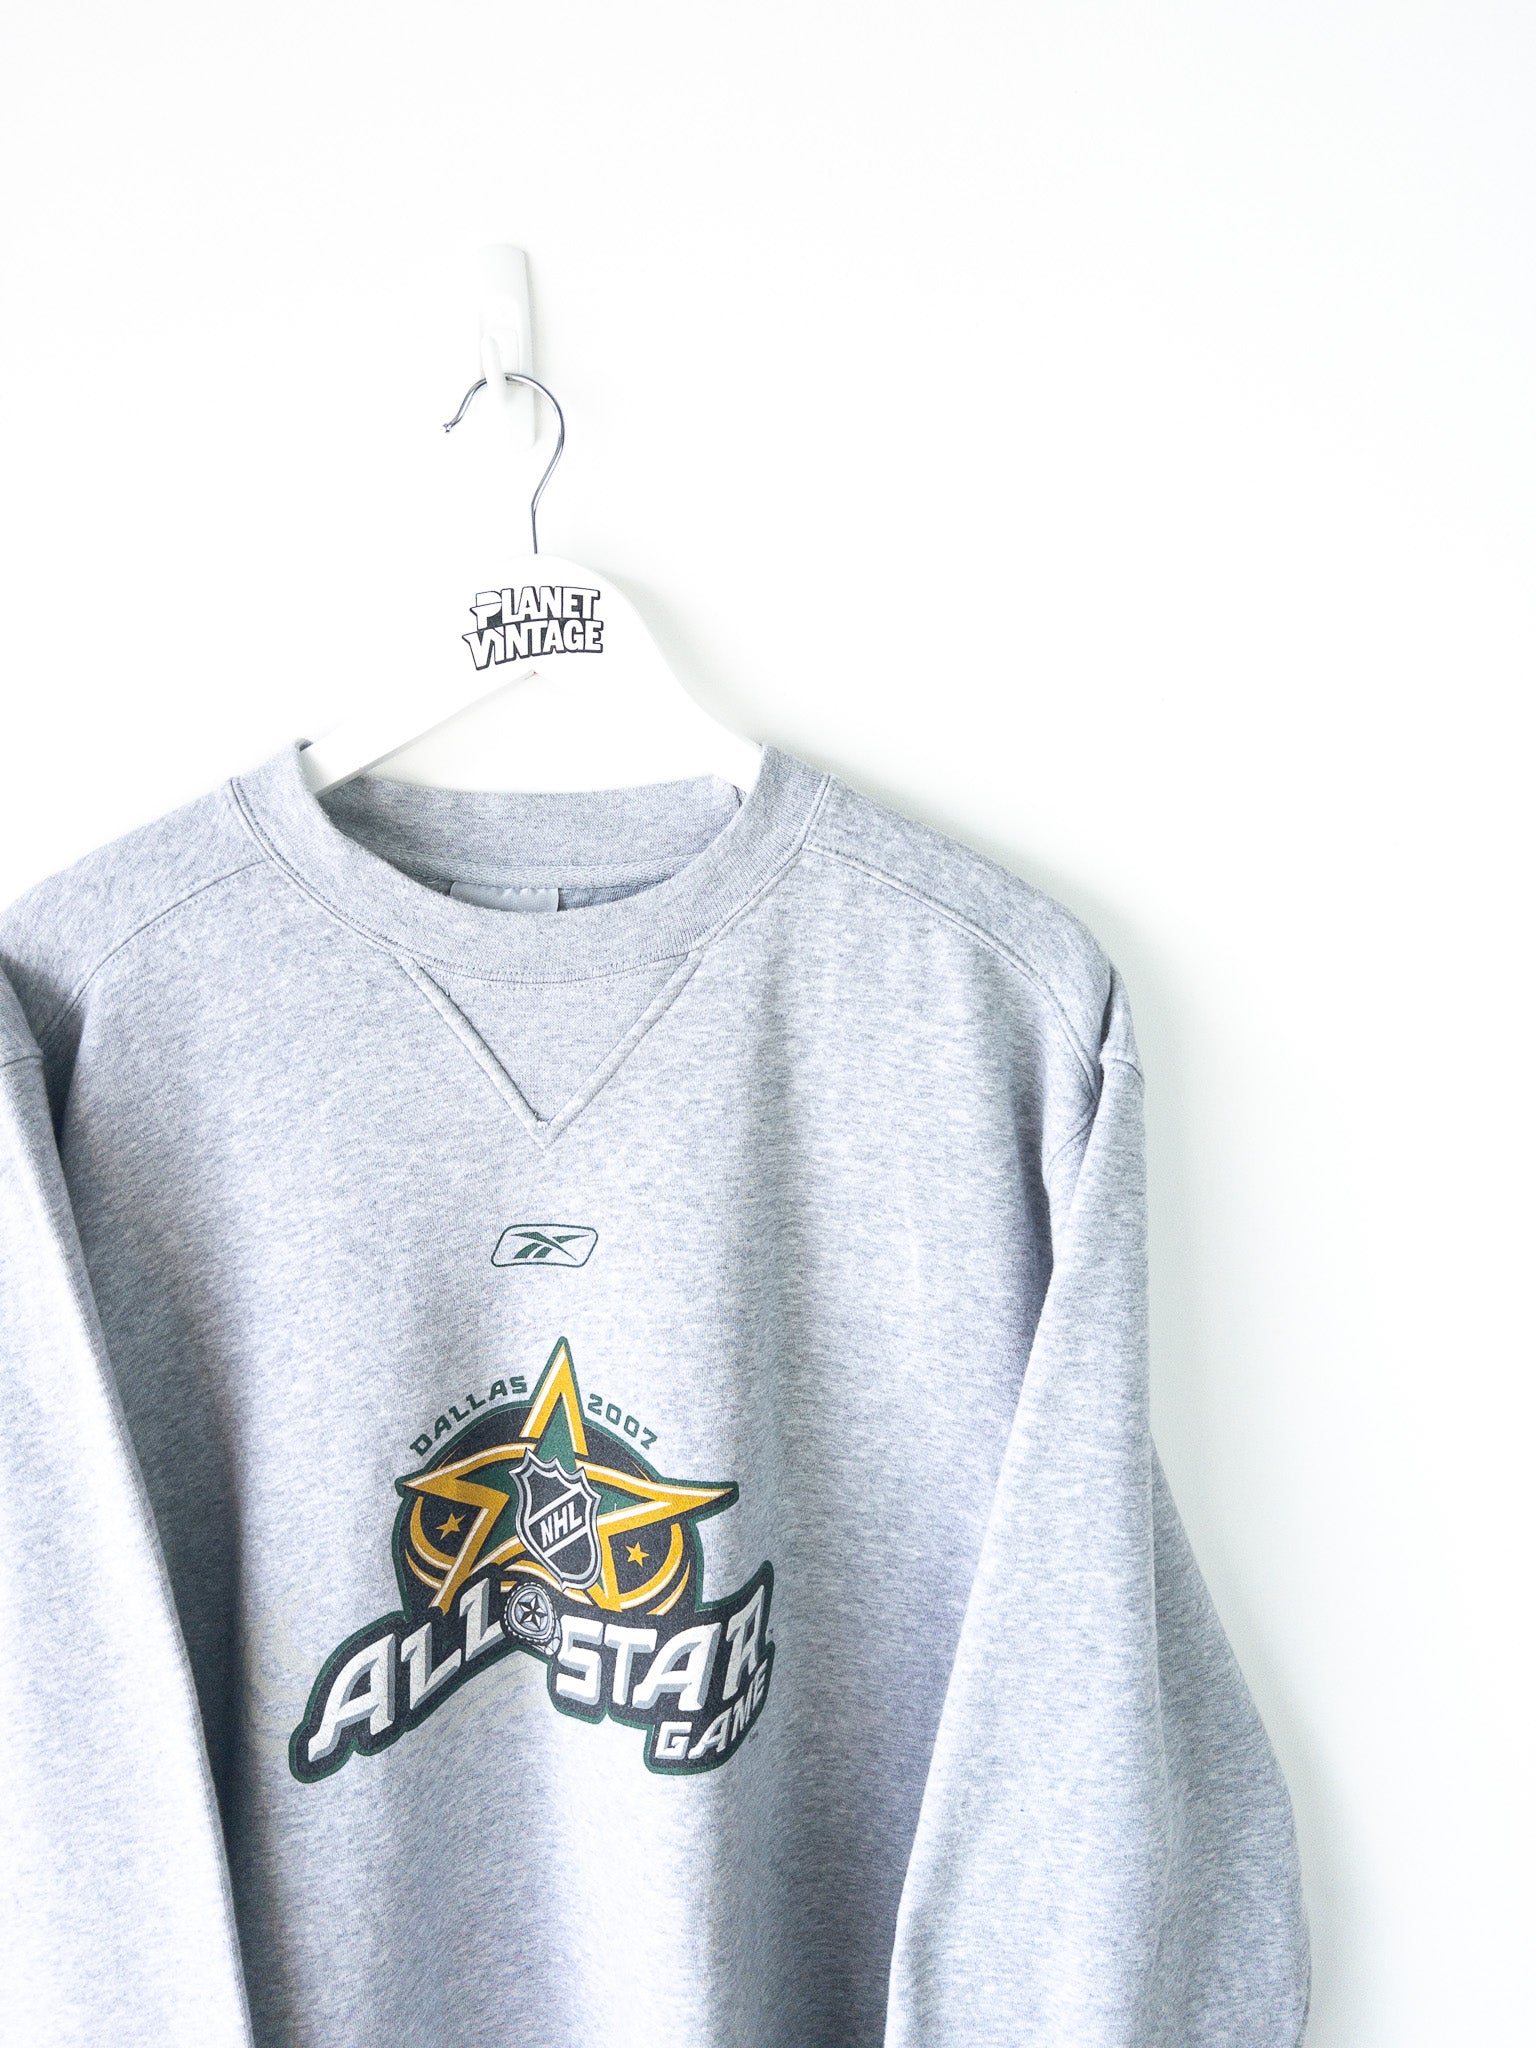 Vintage NHL Dallas All Star Game Sweatshirt (L)